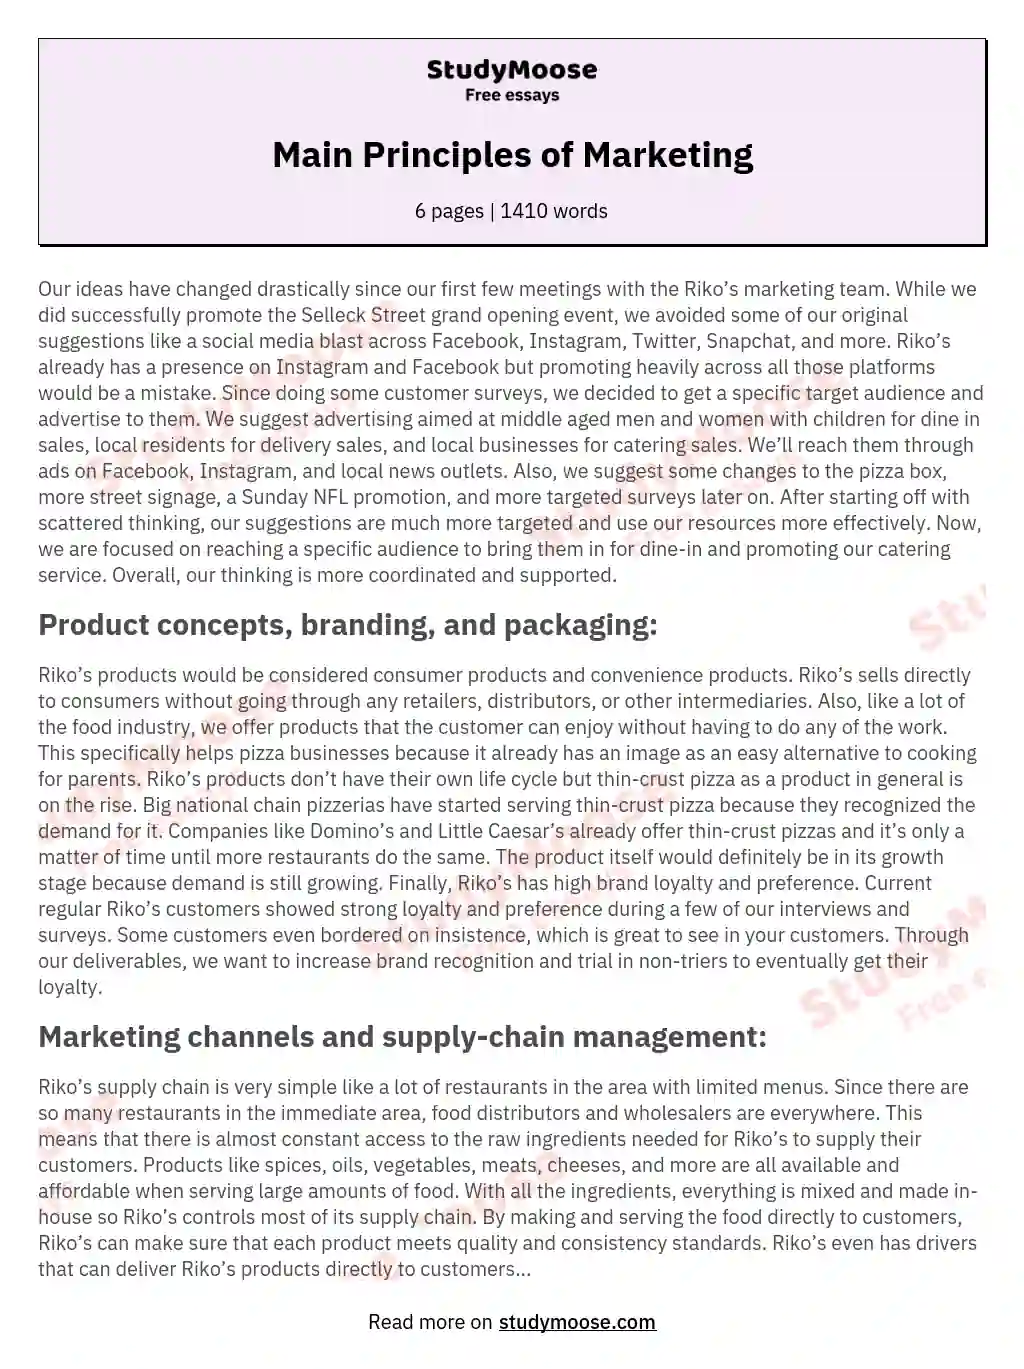 Main Principles of Marketing essay